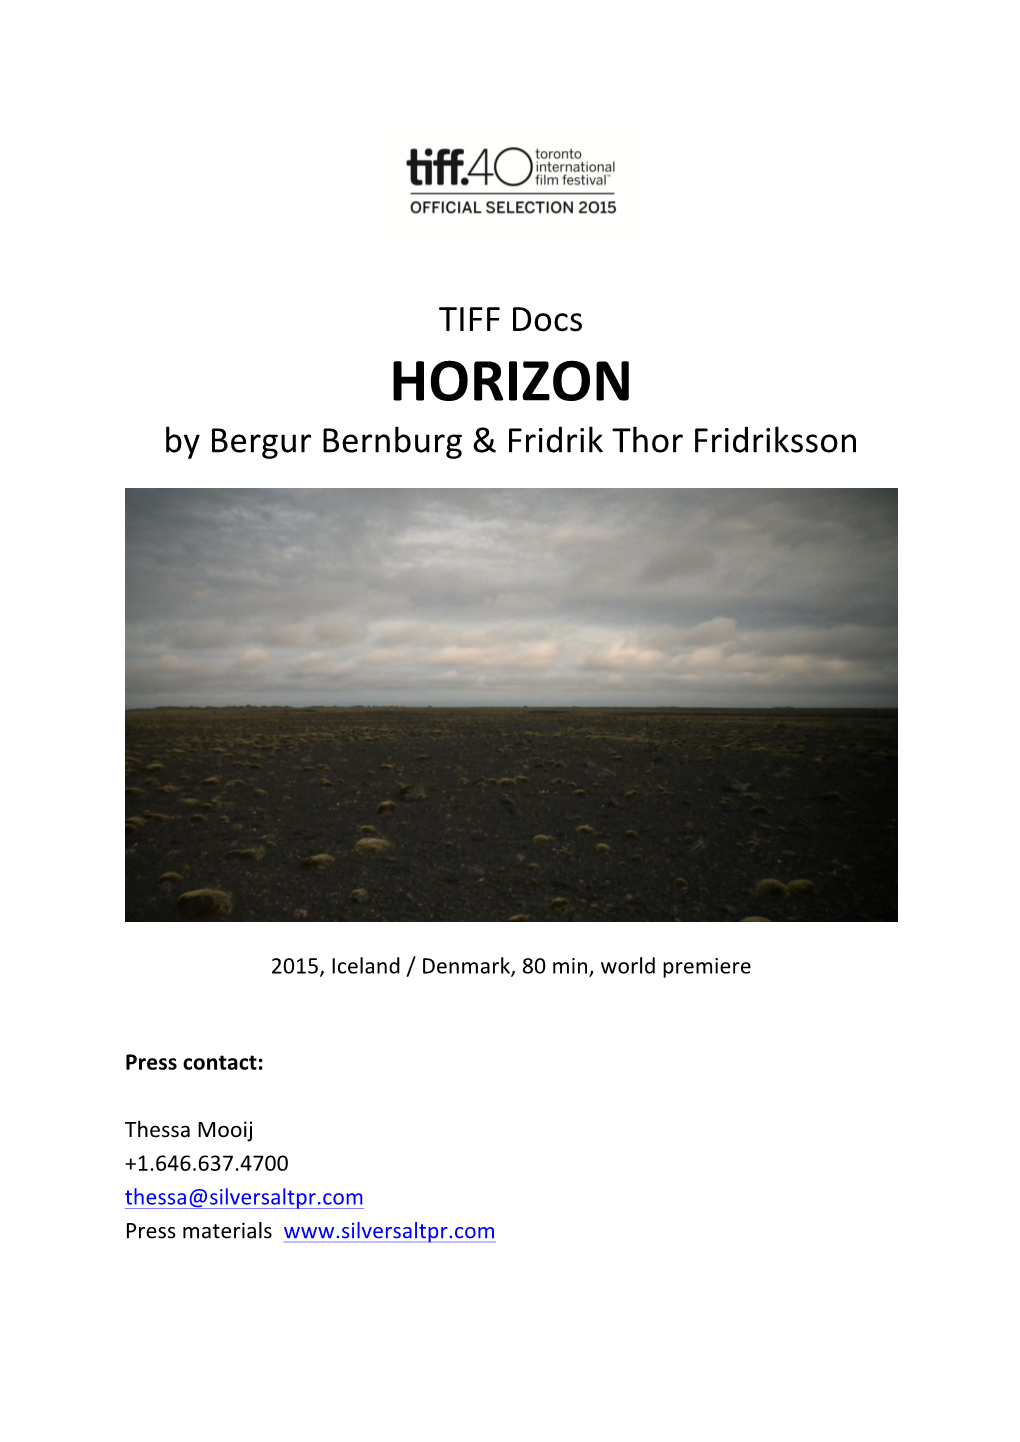 HORIZON by Bergur Bernburg & Fridrik Thor Fridriksson